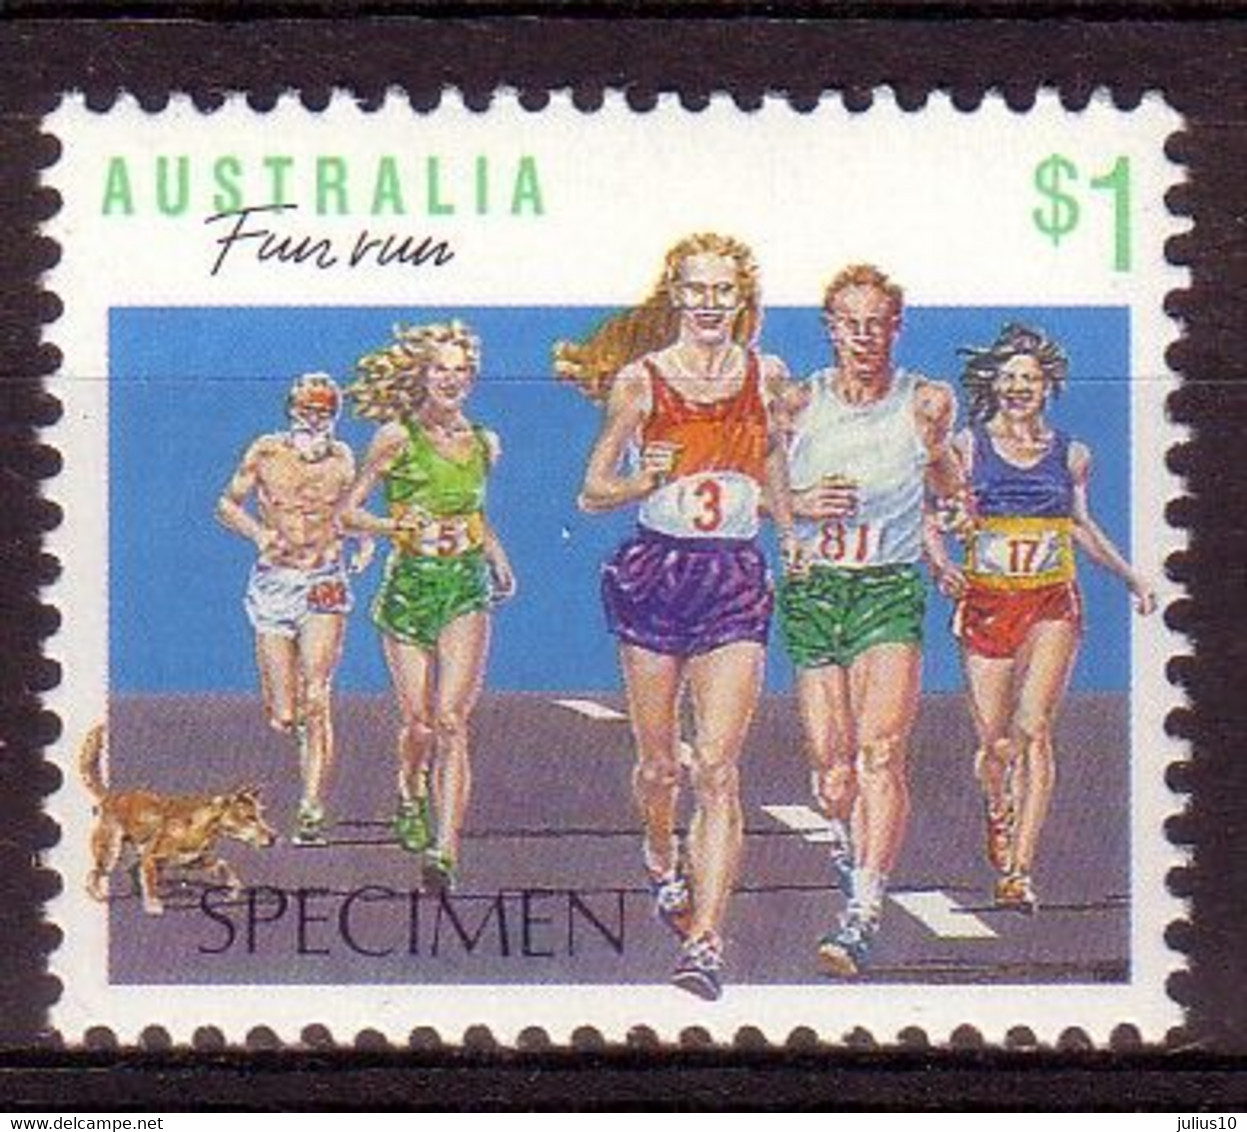 AUSTRALIA 1990 Sport Run „SPECIMEN“ High Value MNH Mi 1186 #10002 - Errors, Freaks & Oddities (EFO)